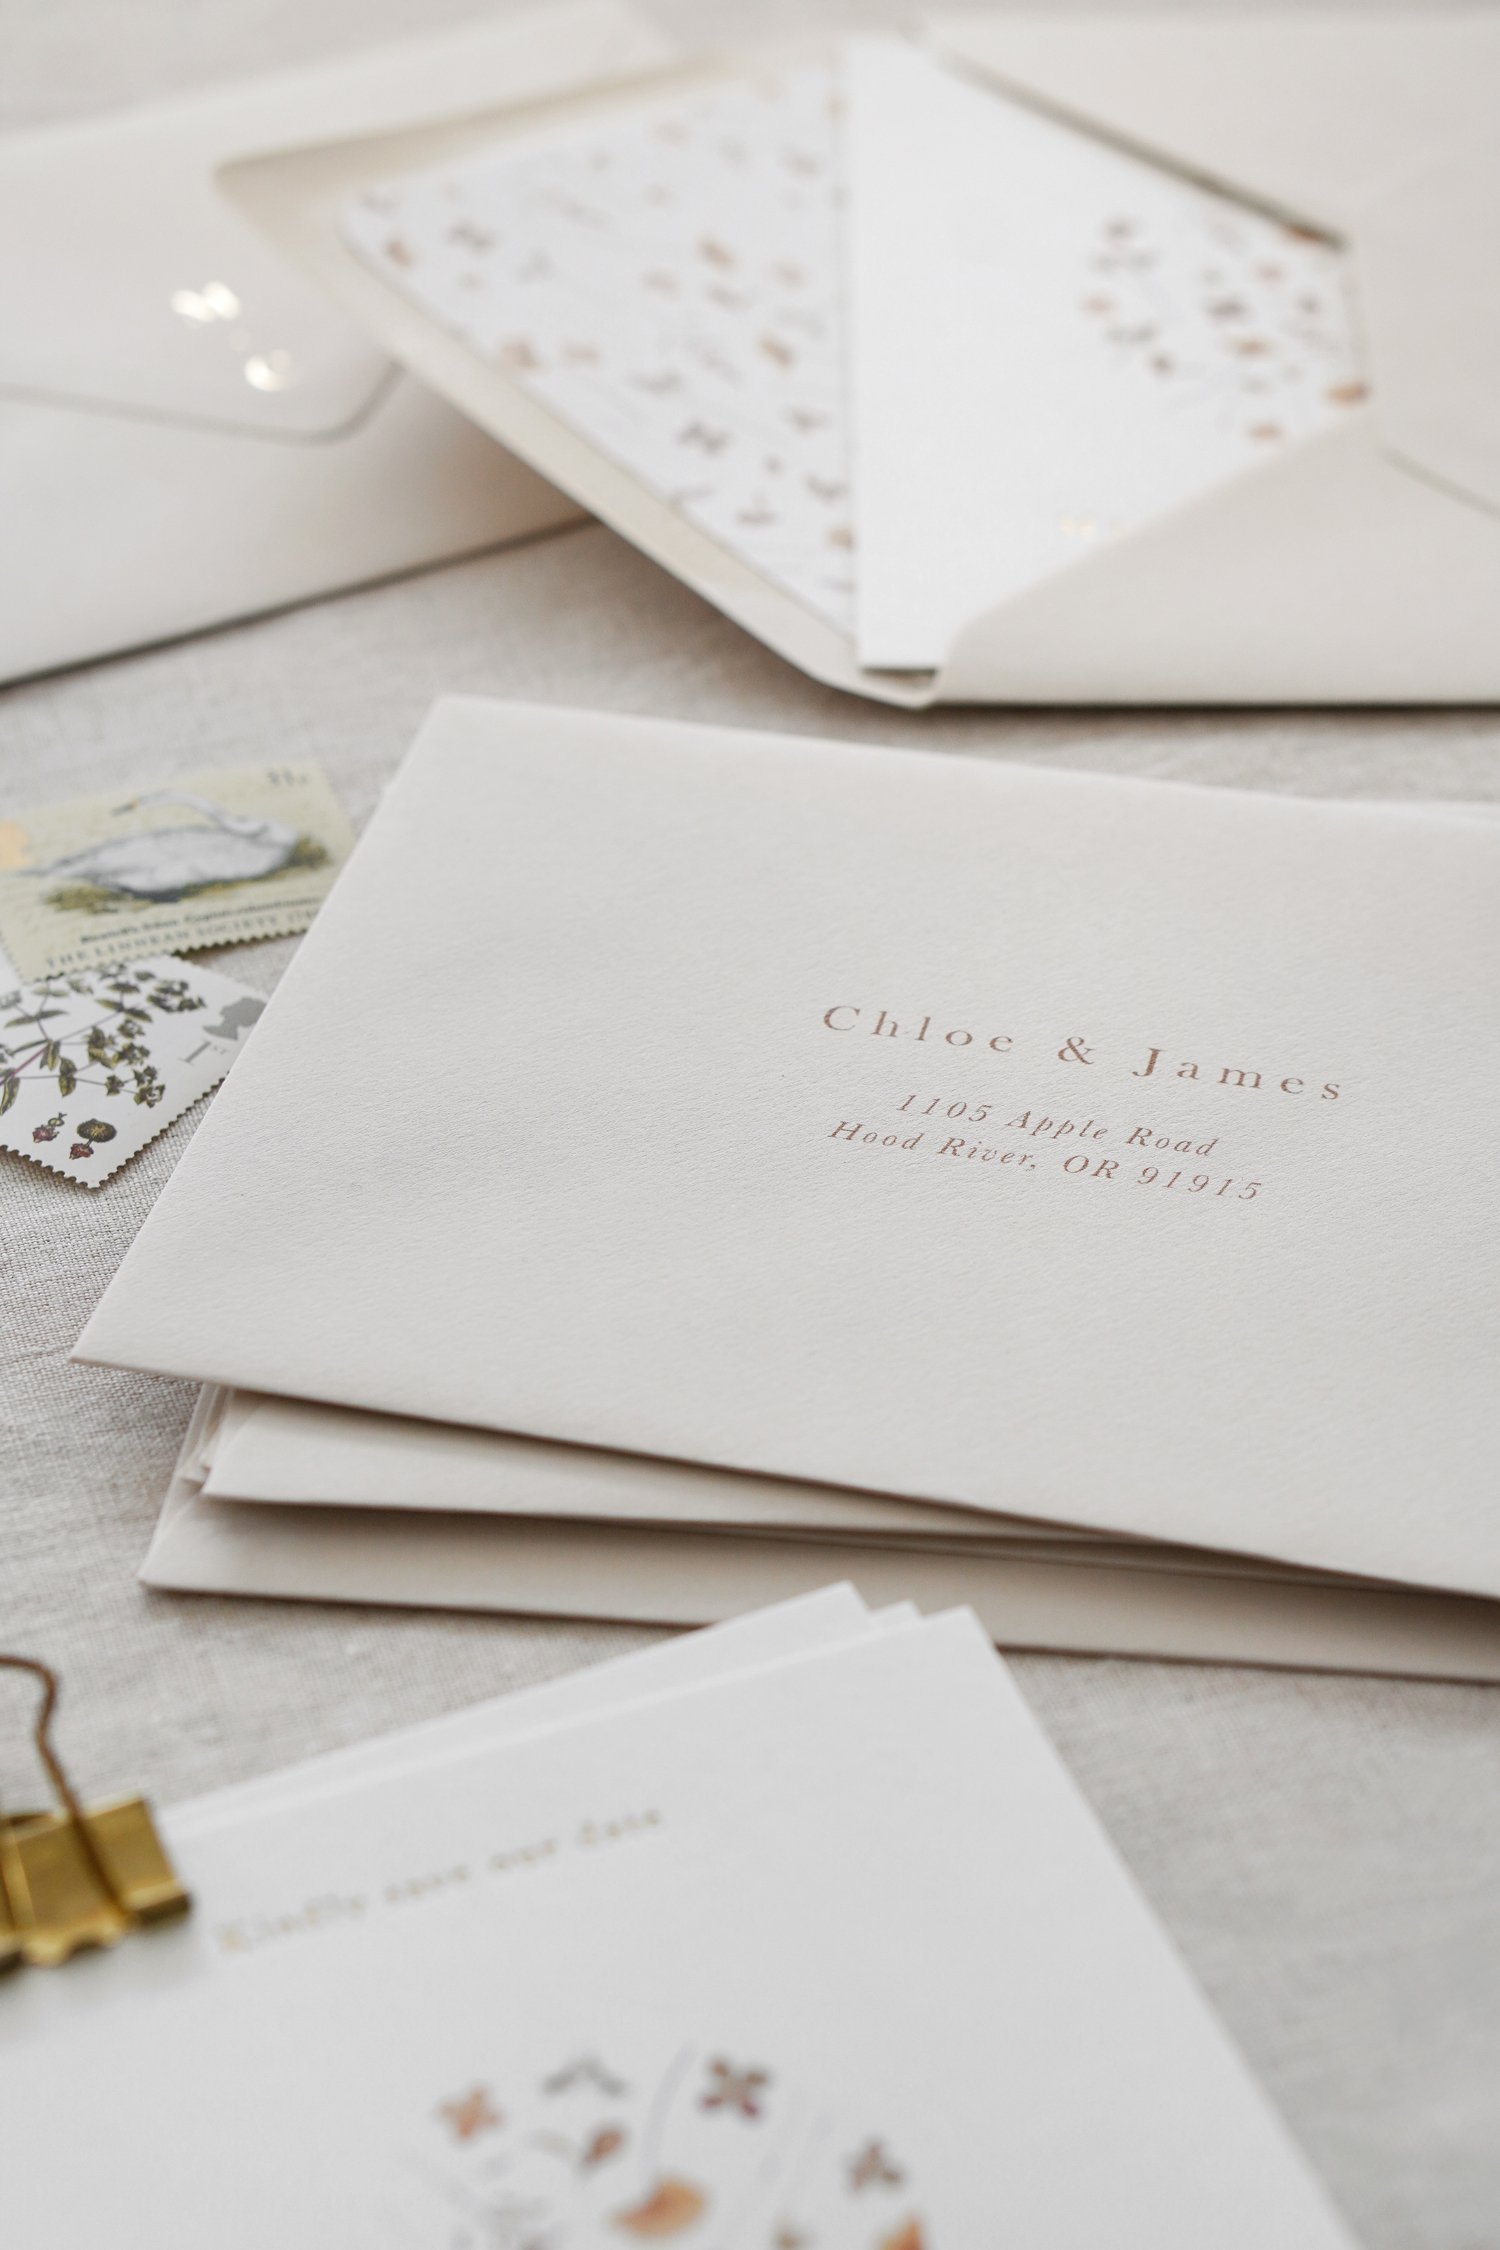 Guest addresses printed on envelopes